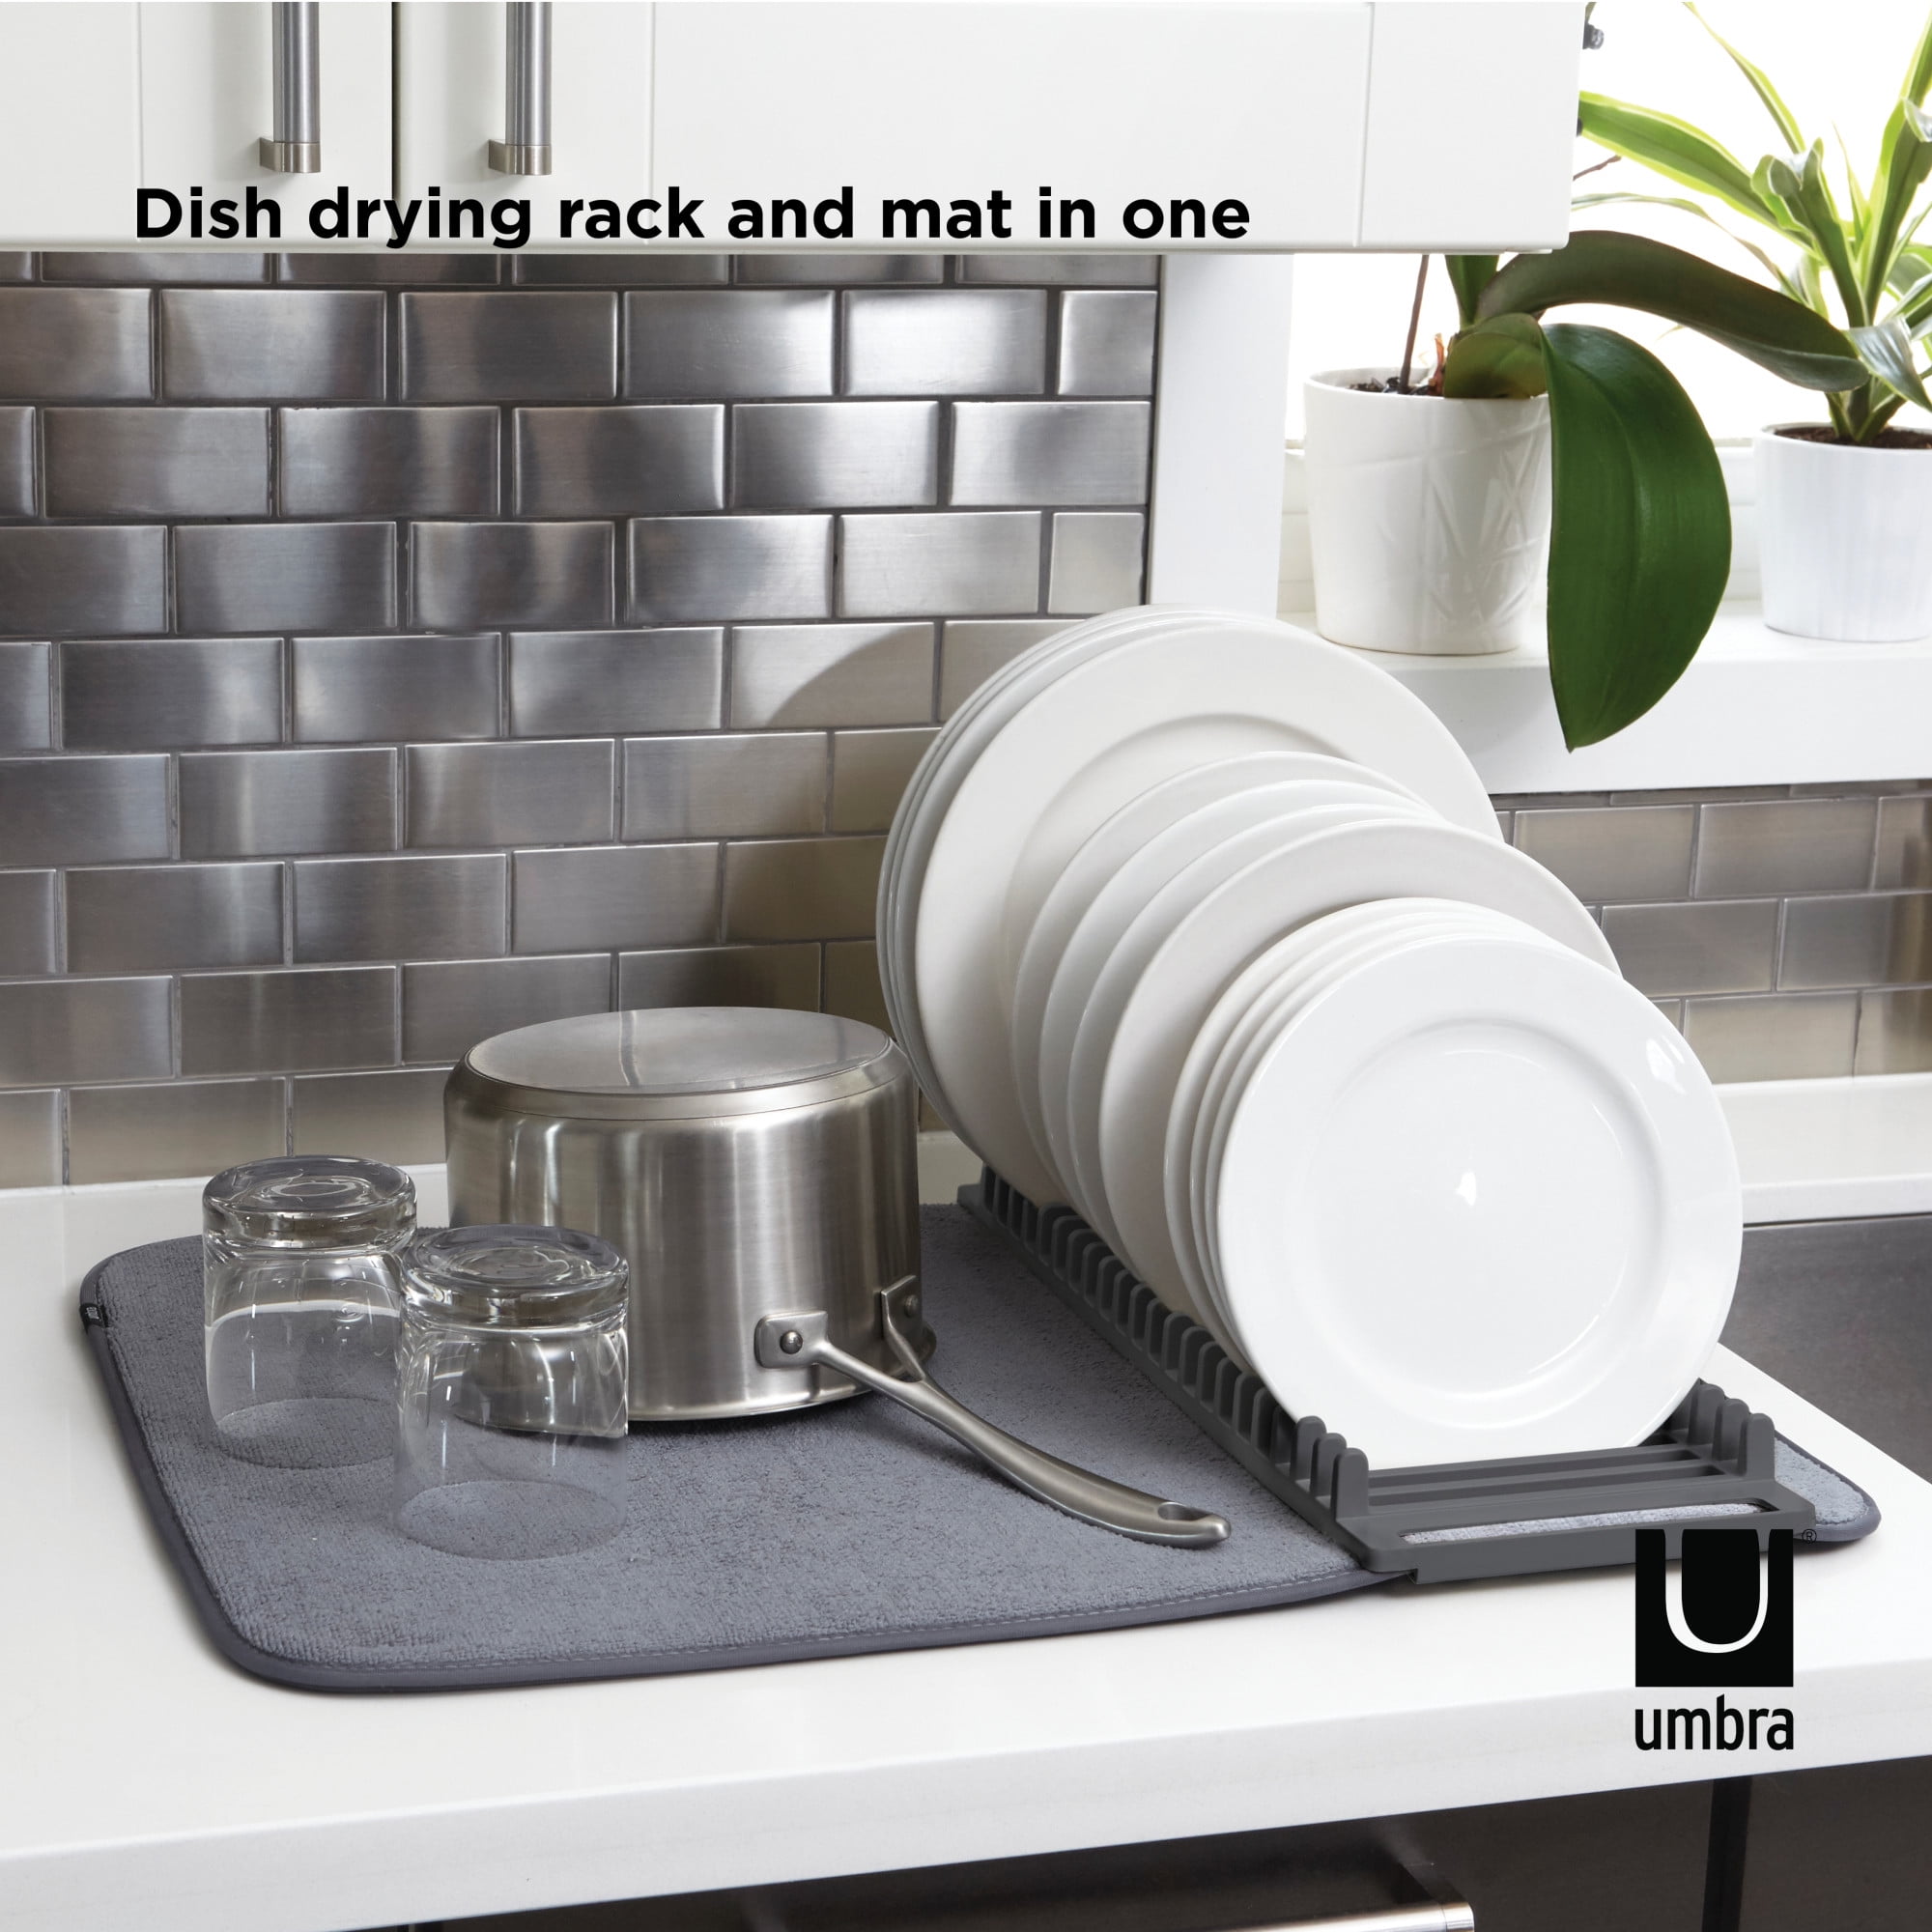 Udry Dishrack - Umbra 1004301-149